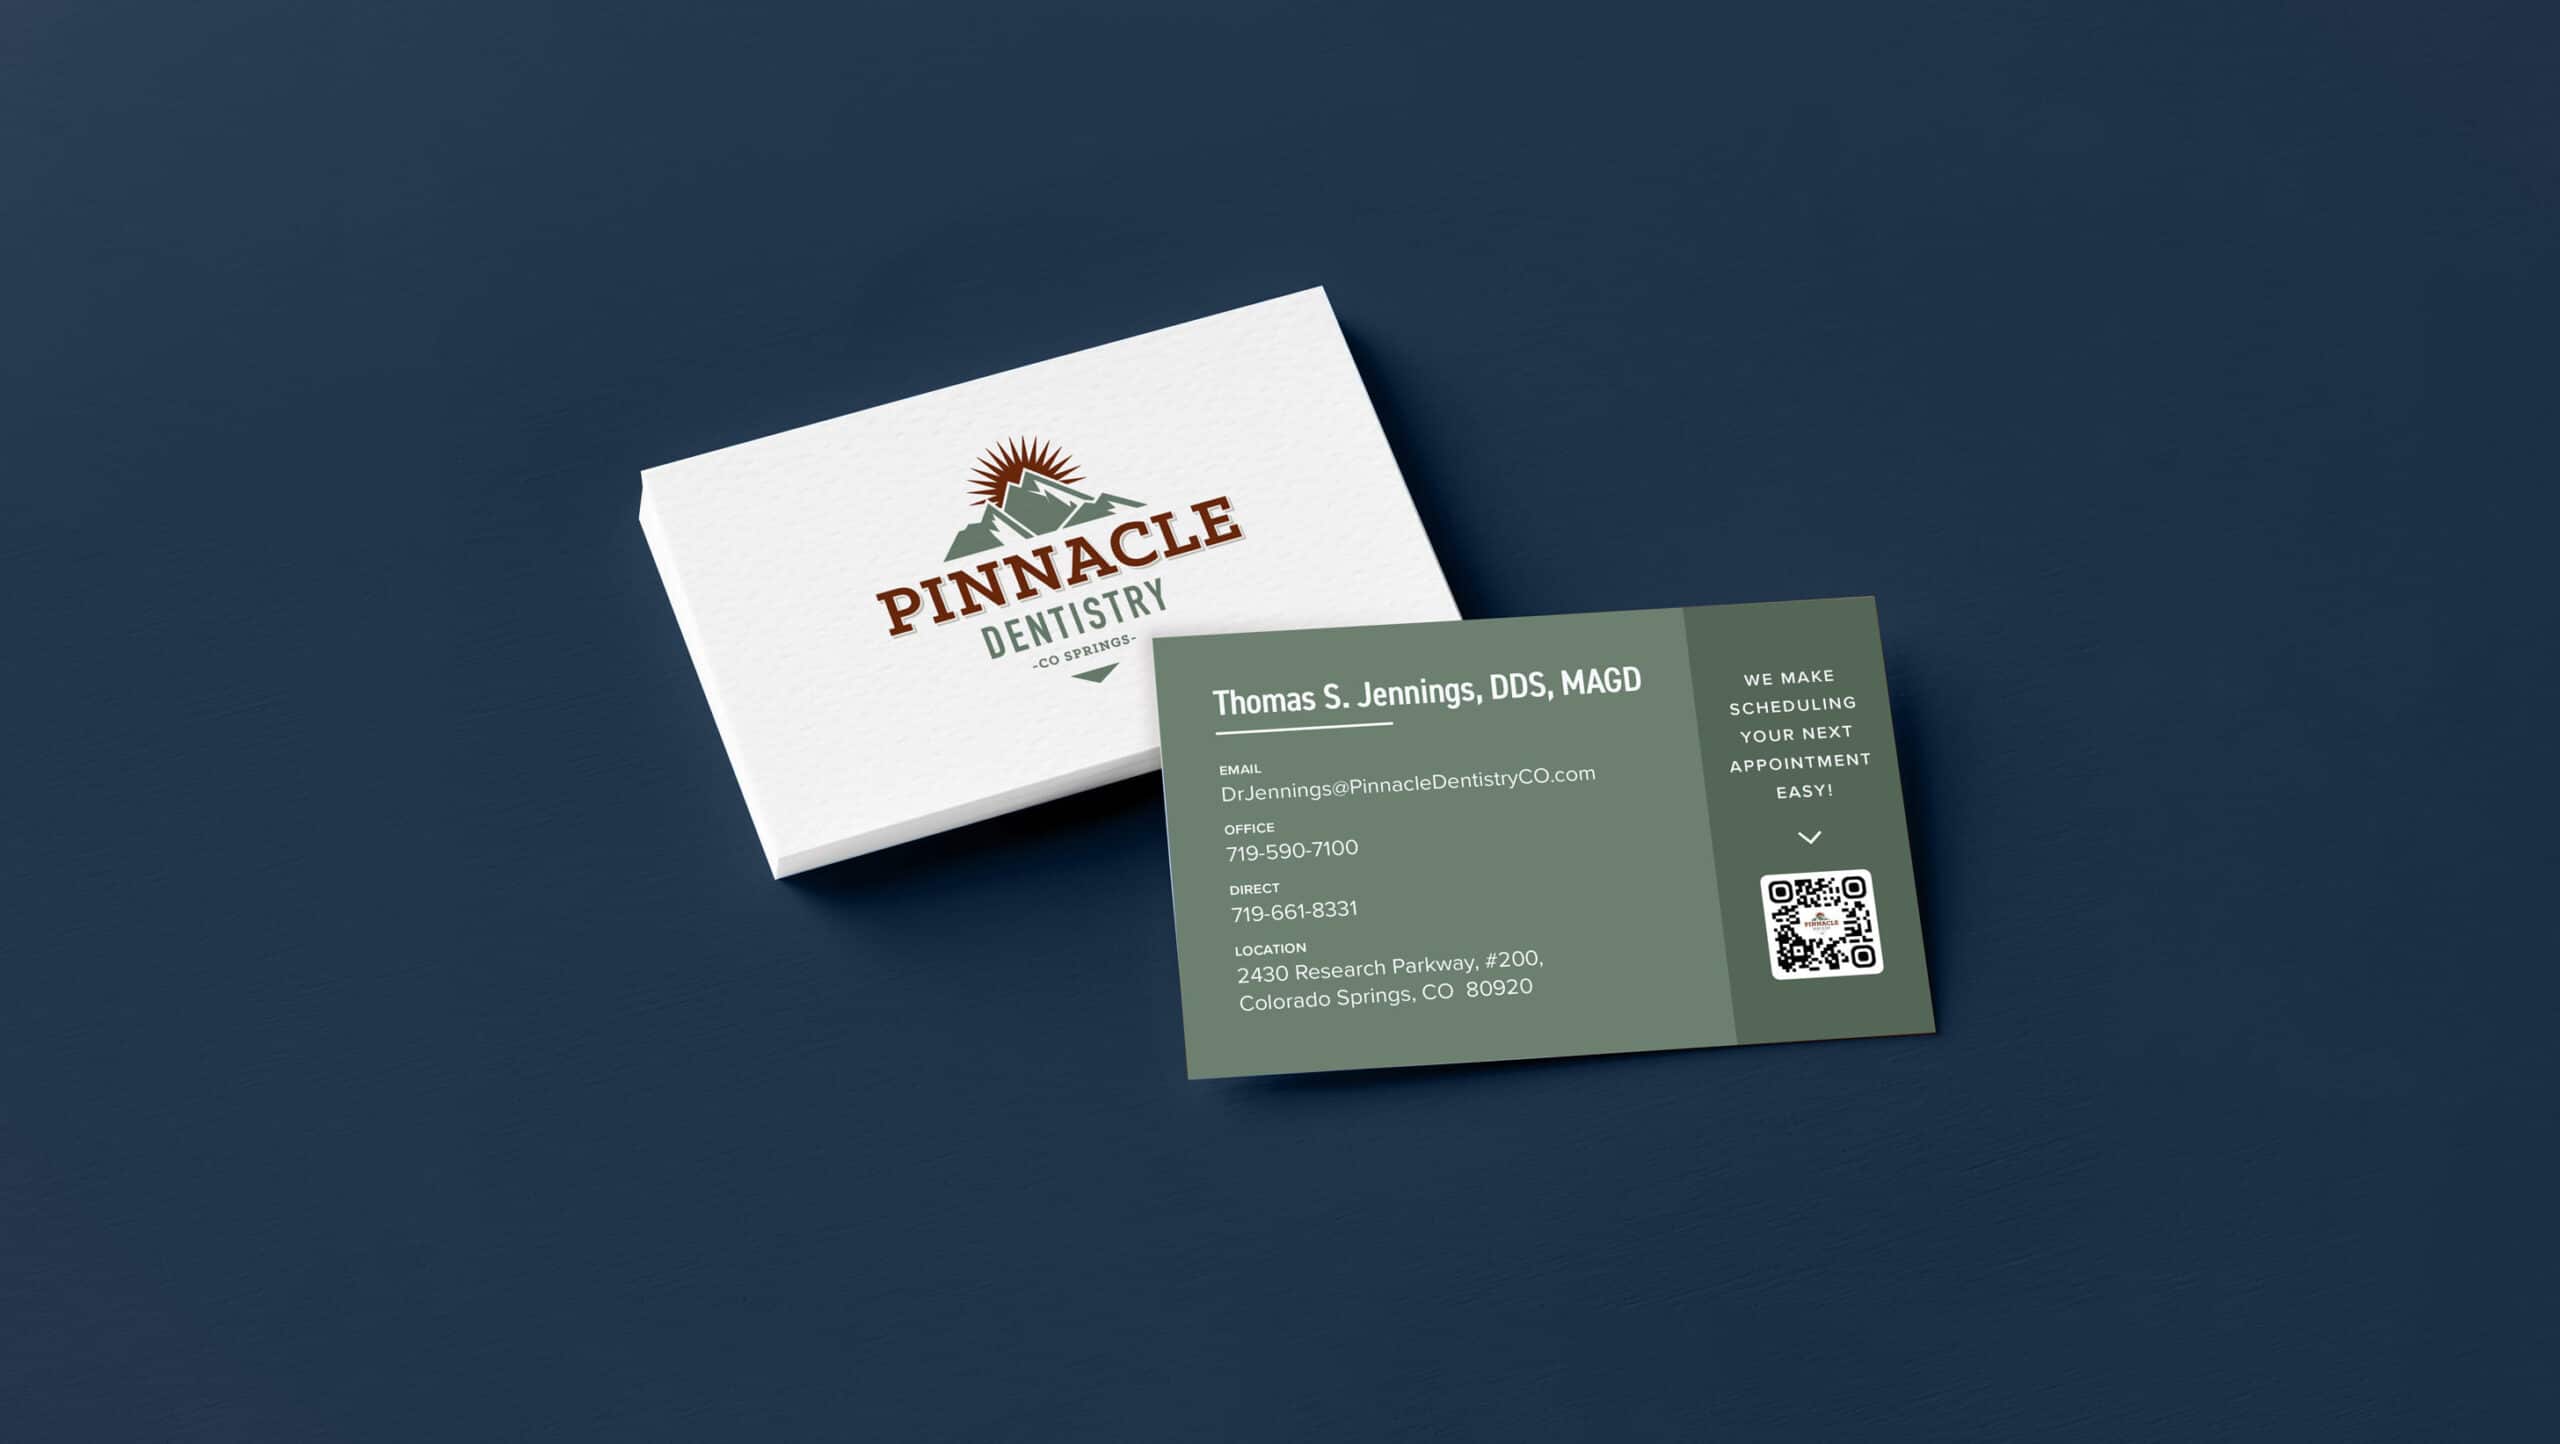 Pinnacle Dentistry business card mockup